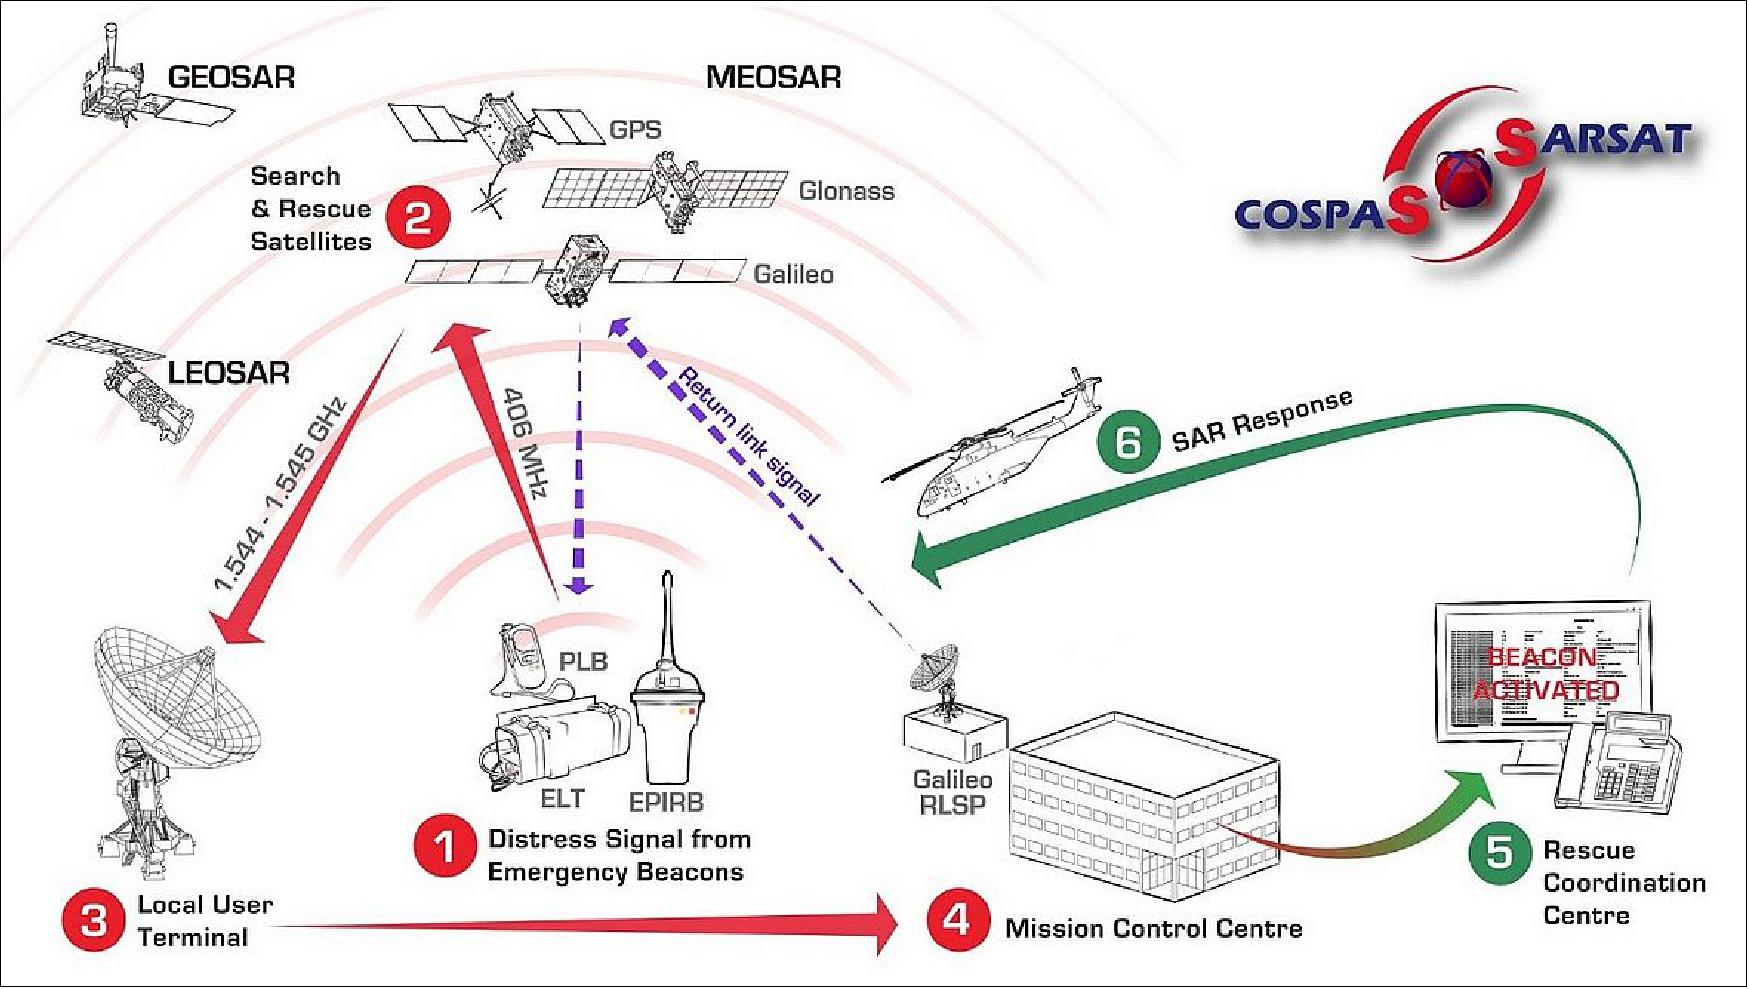 Figure 115: COSPAS-SARSAT System Overview (image credit: GSA)